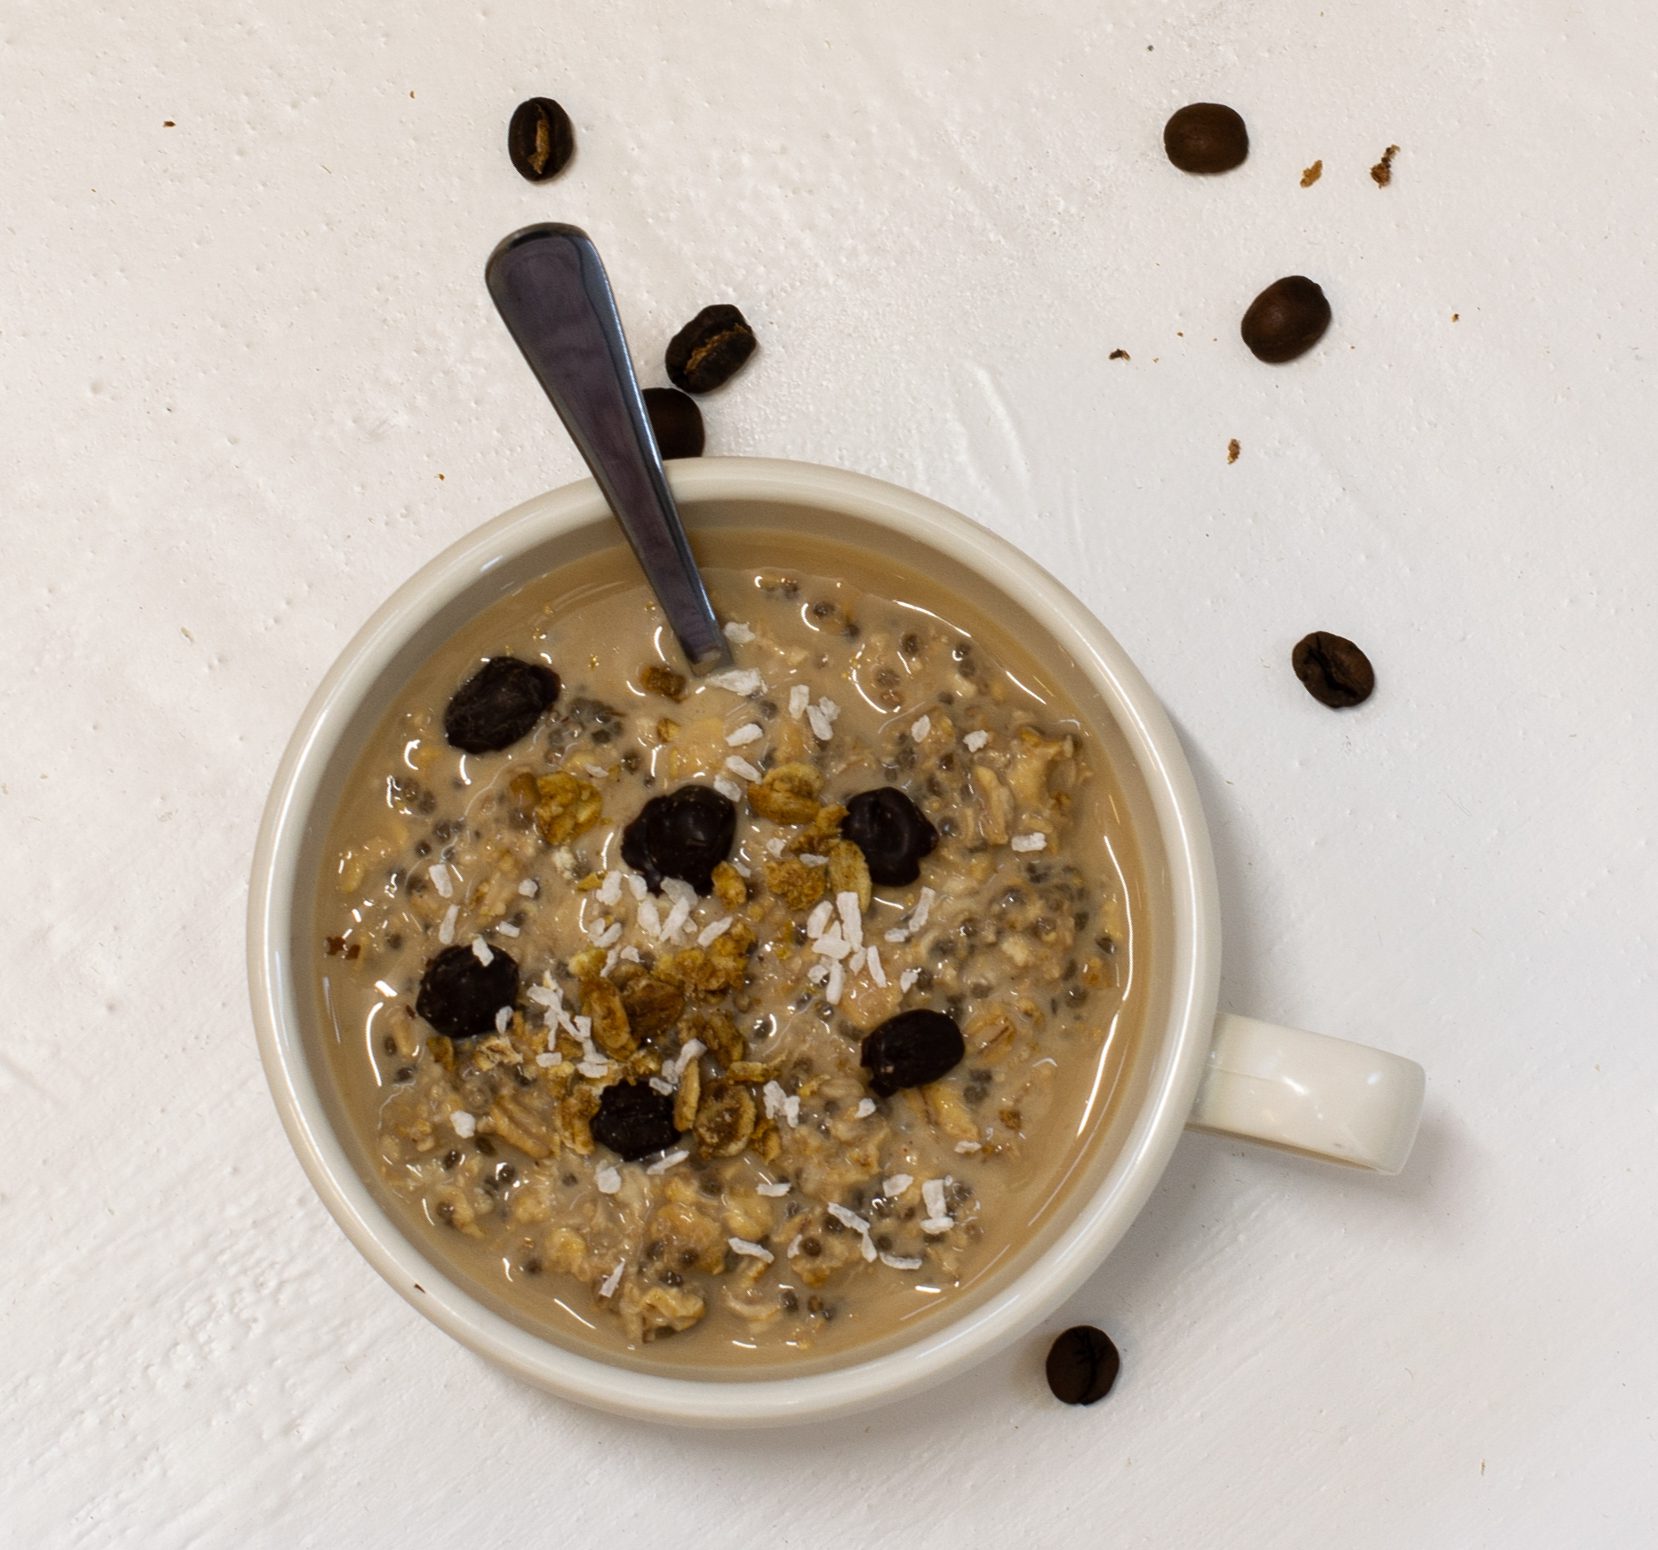 Coffee overnight oats in a white mug with teaspoon